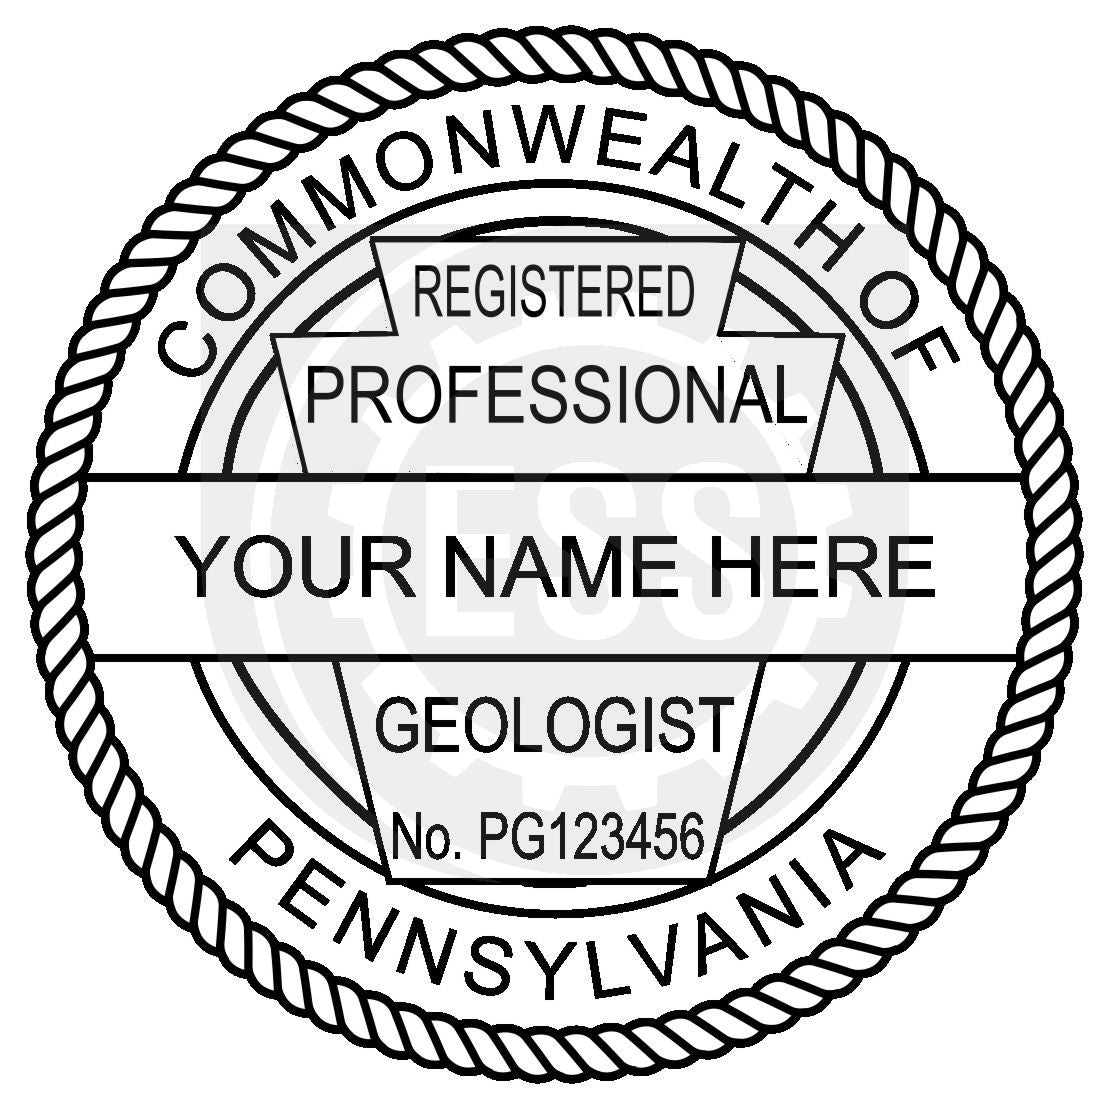 Pennsylvania Geologist Seal Setup